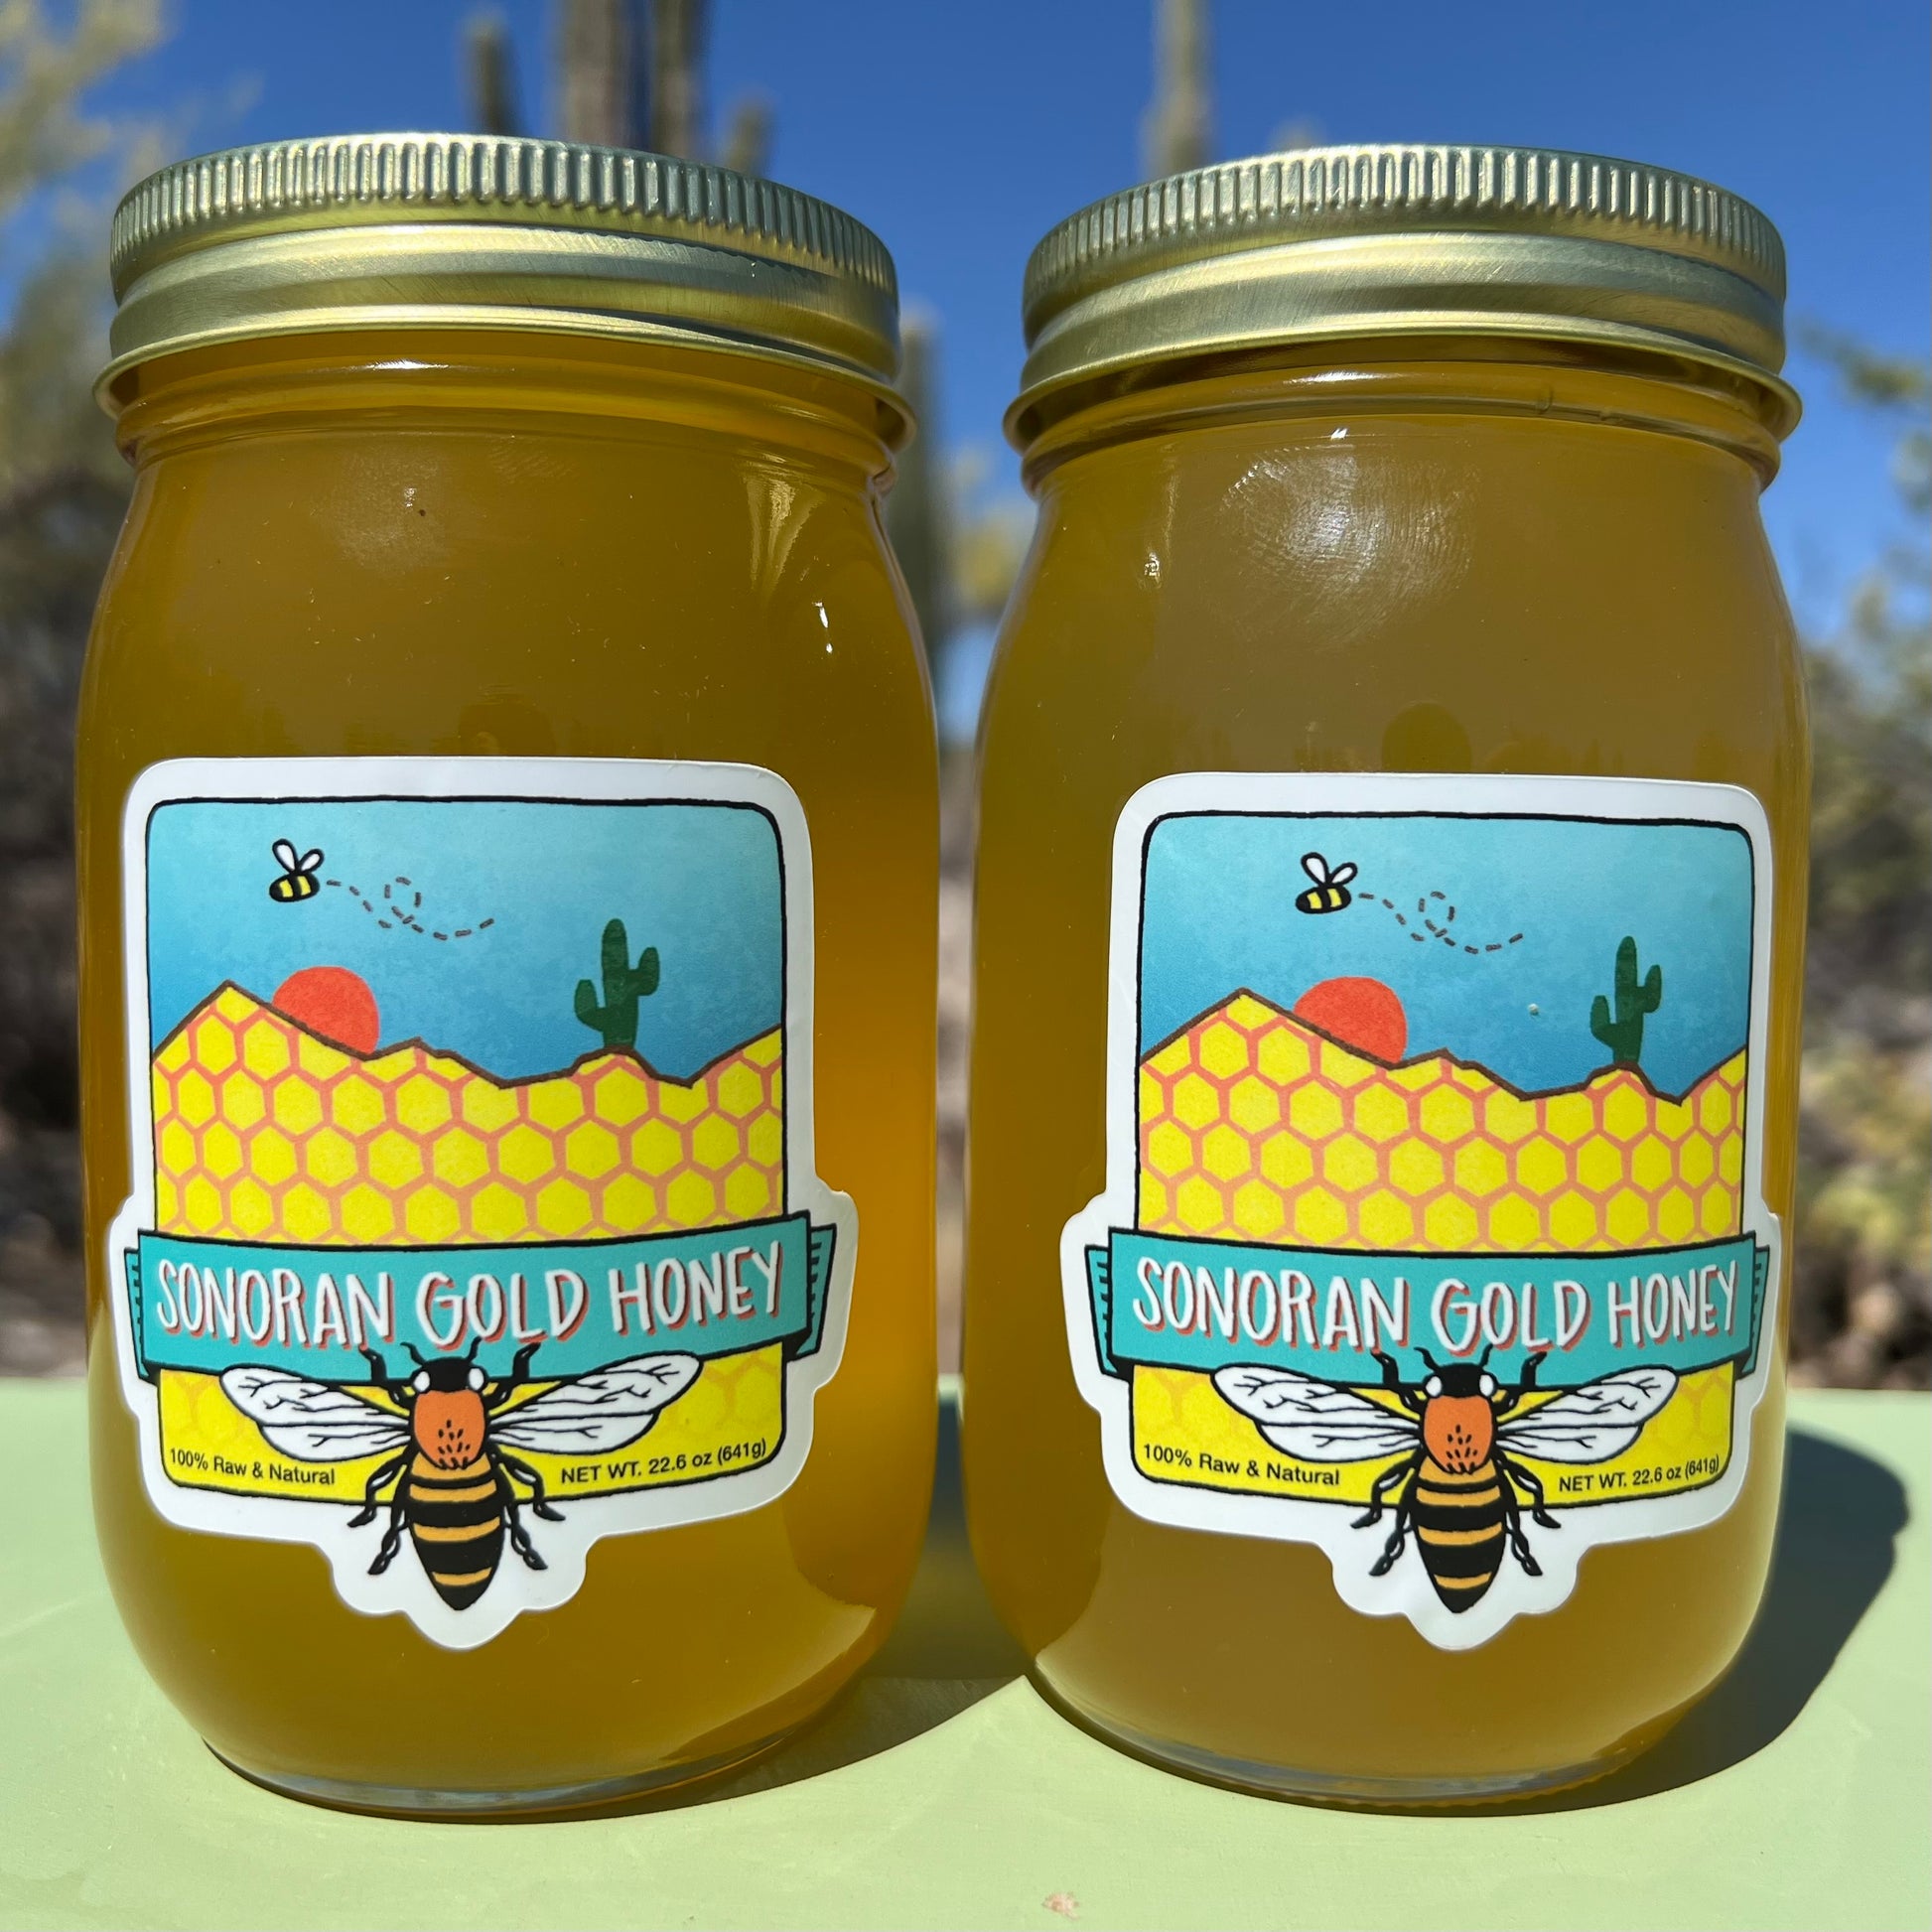 Two 16oz Jars of Sonoran Gold Honey - Sonoran Gold Honey 